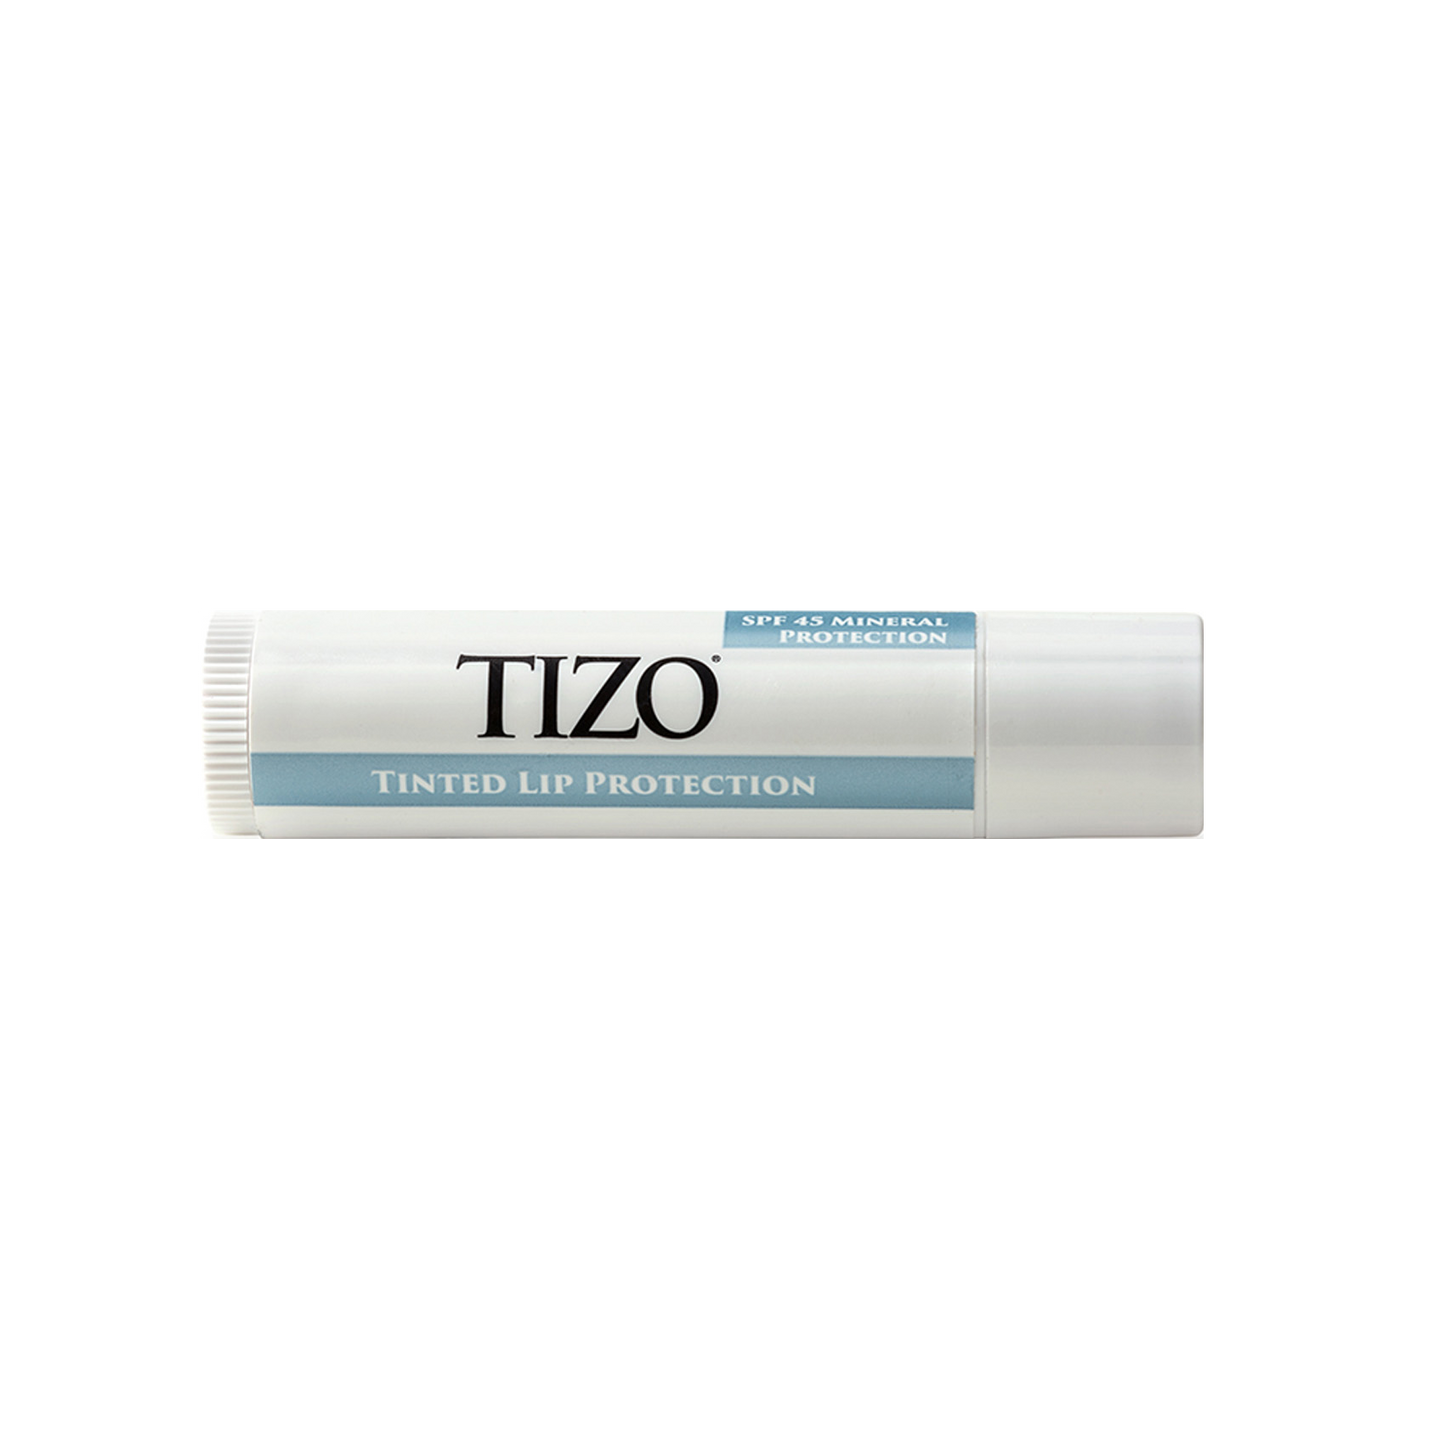 TiZO: Lip Protection LipTect SPF 45